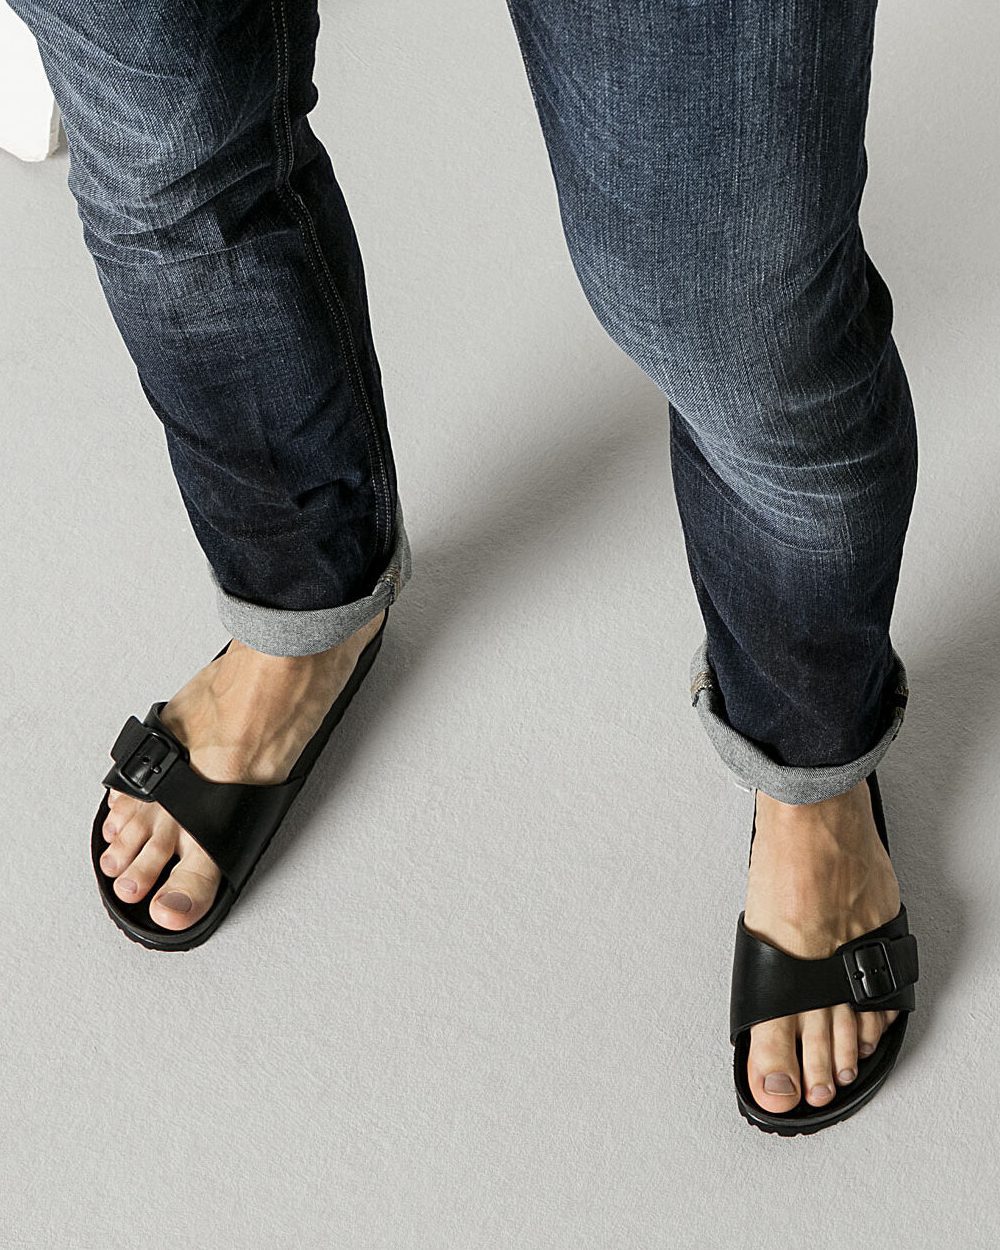 19 Best Slides for Men - Stylish Slide Sandals for Men 2023